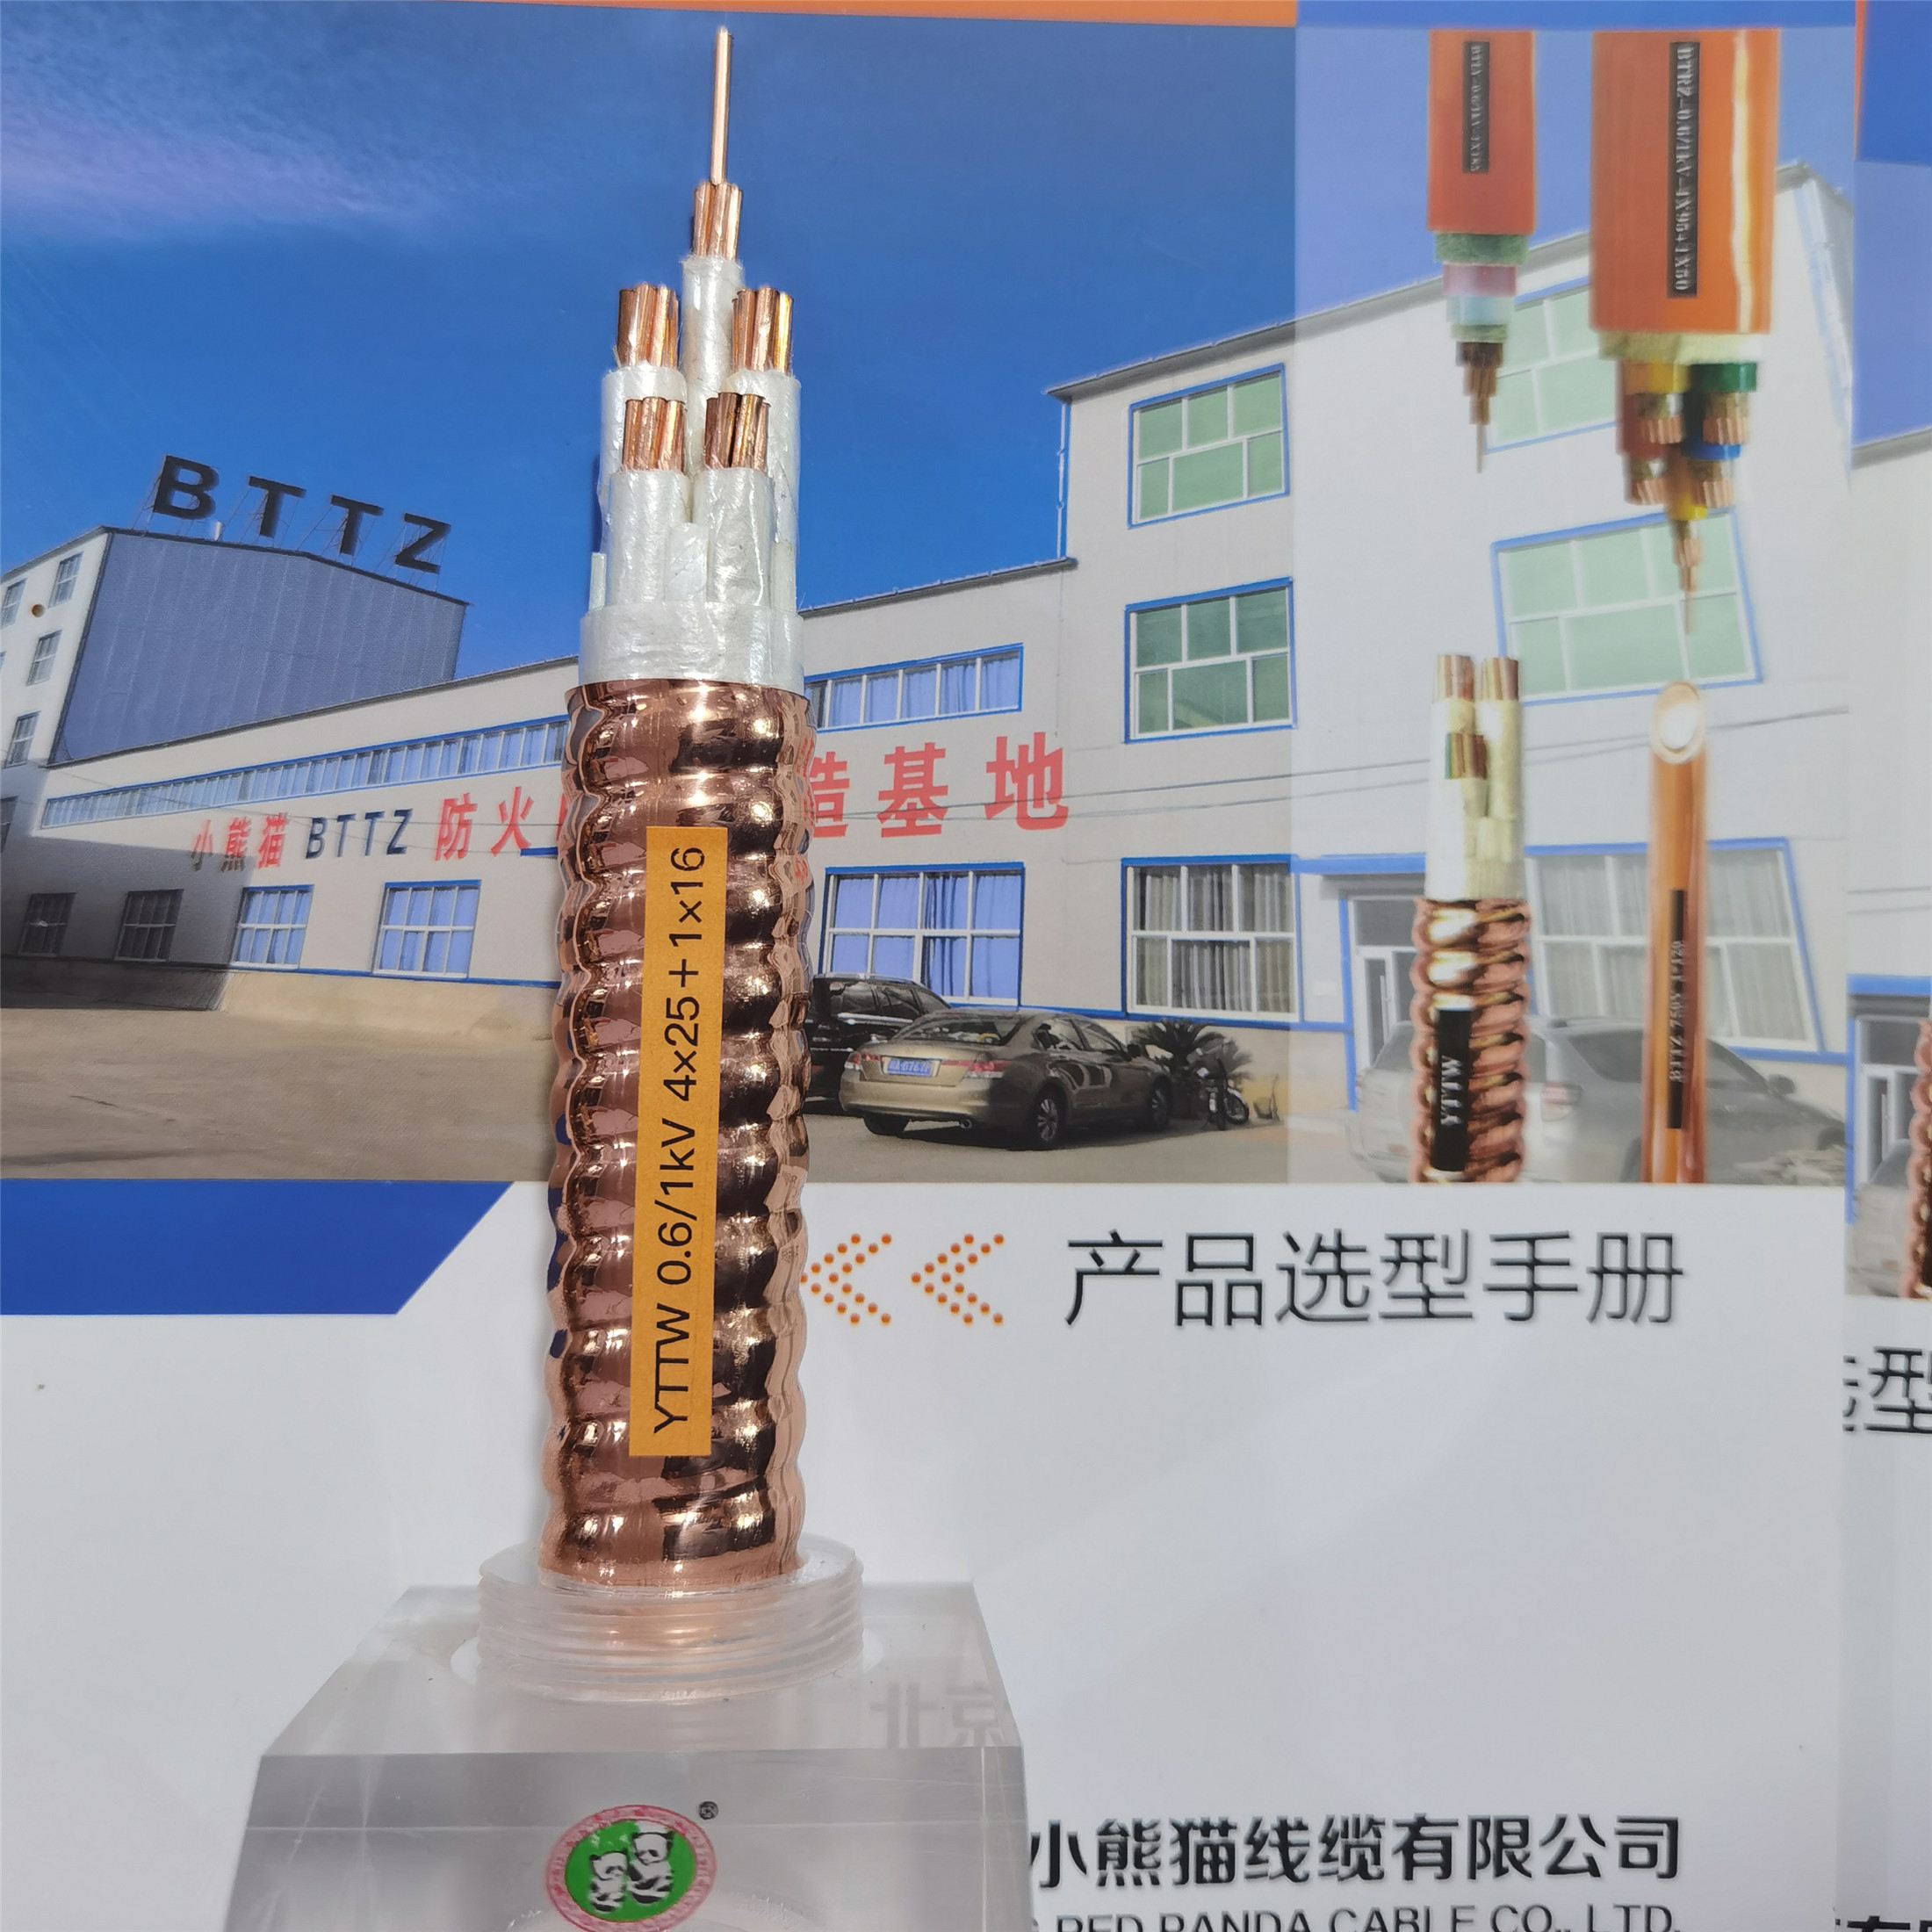 YTTWY，NG-A  ,BTLY厂家RTTZ  BTTZ  BBTRZ   BTTRZ仓储批发矿物质防火电缆